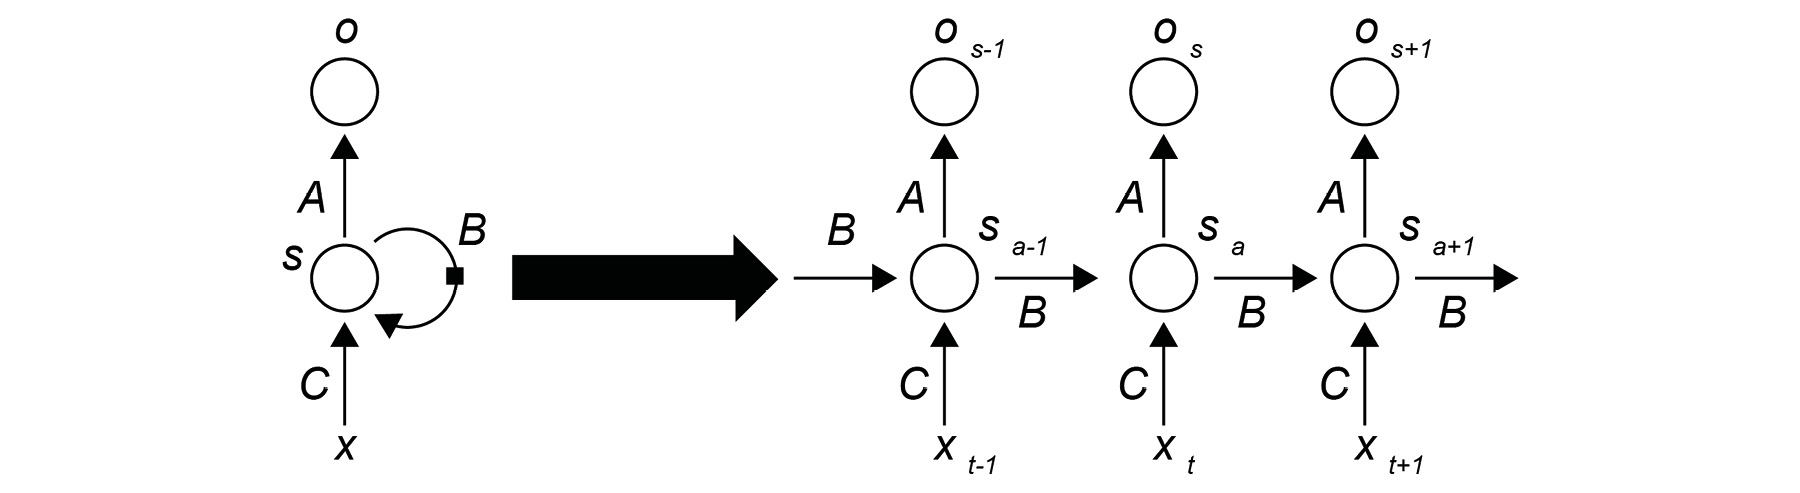 Figure 7.34: Representation of recurrent layer
